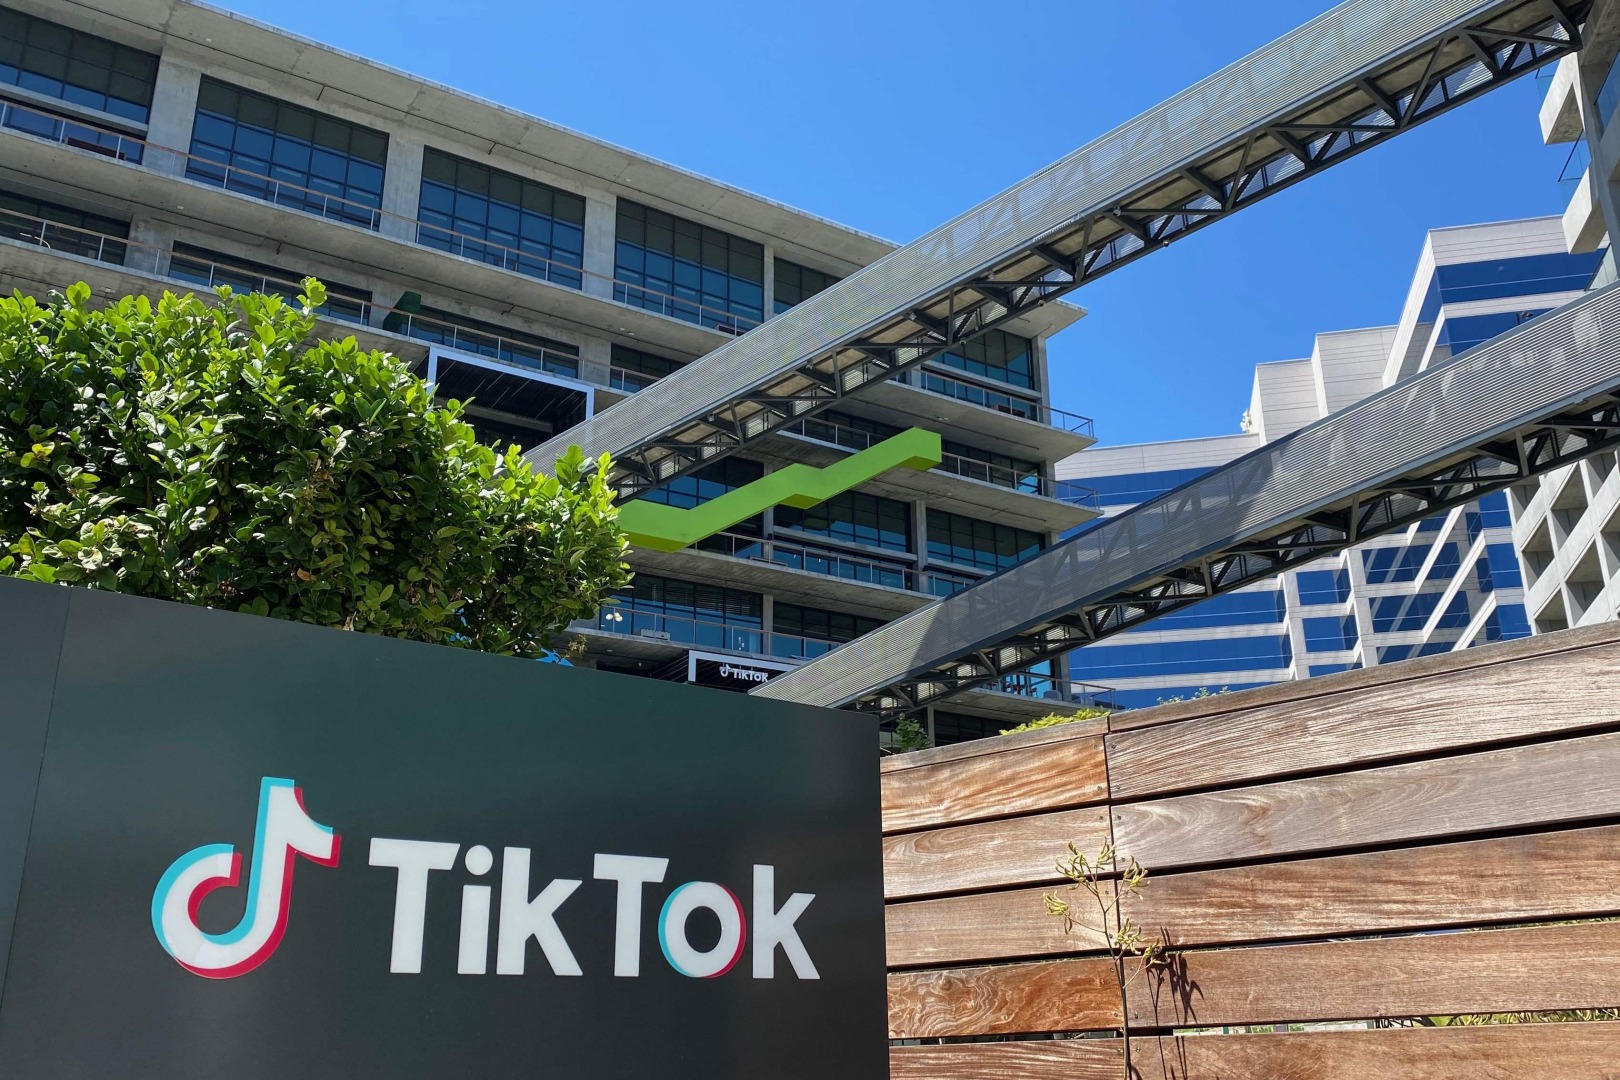 EU Opens Investigation Against TikTok Over Child Protection